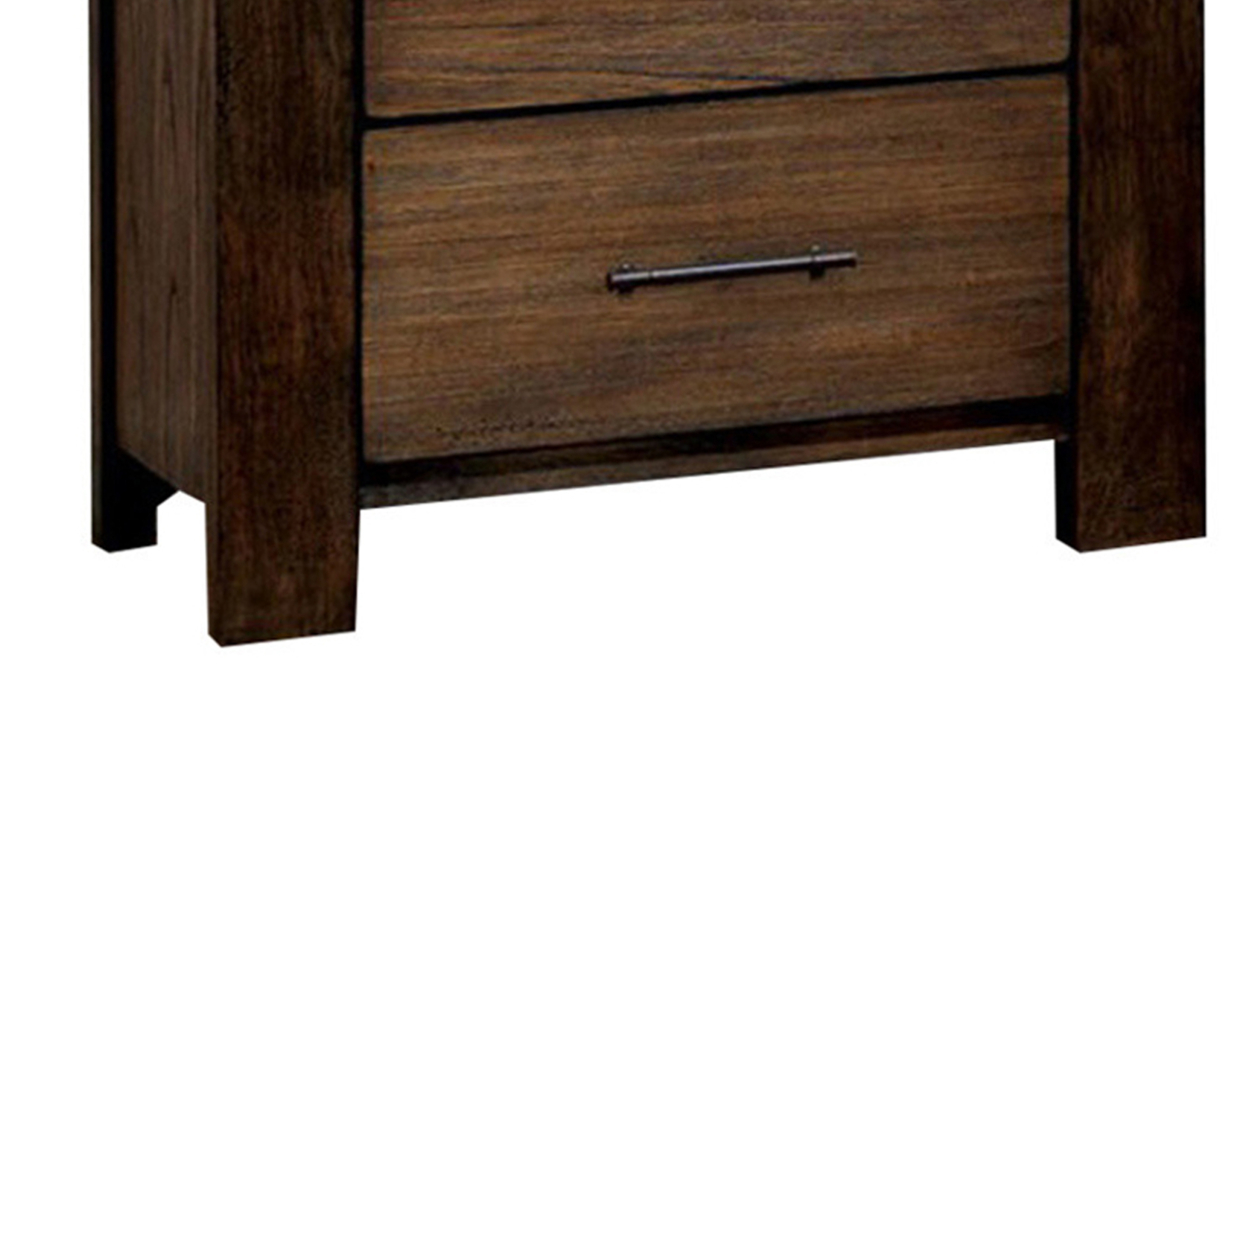 2 Drawer Wooden Nightstand With Grain Details, Oak Brown- Saltoro Sherpi